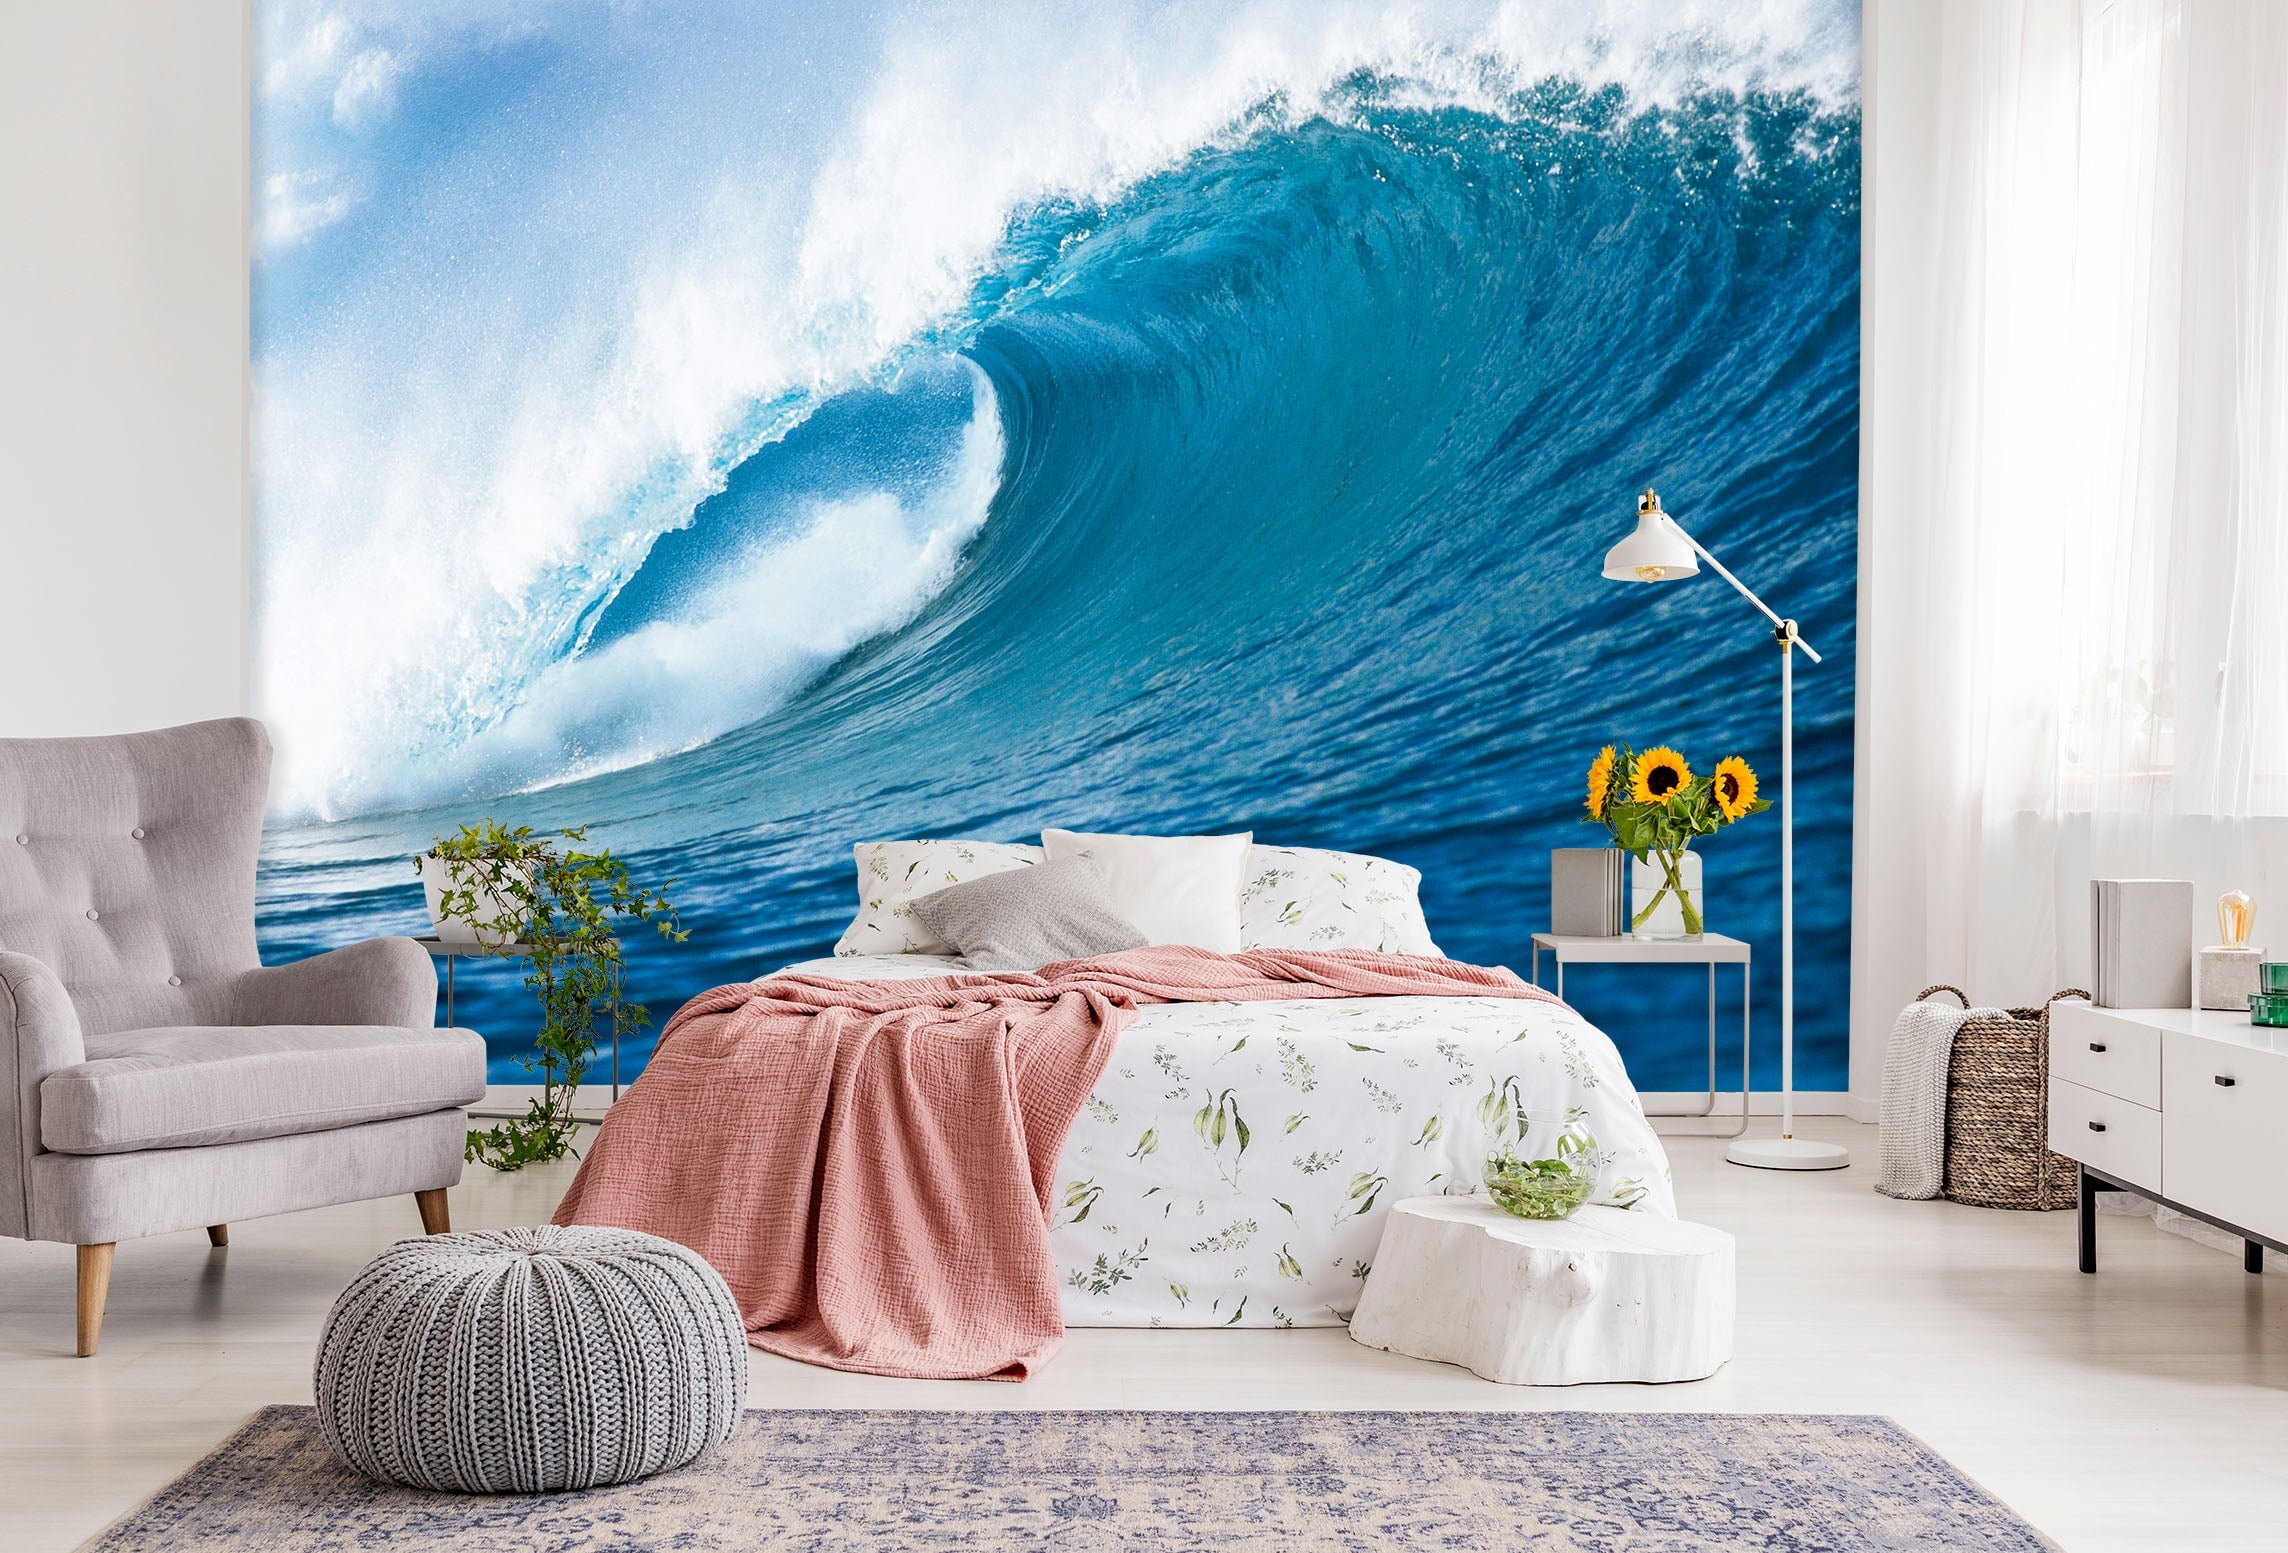 3D Ocean Waves 146 Wall Murals Wallpaper AJ Wallpaper 2 